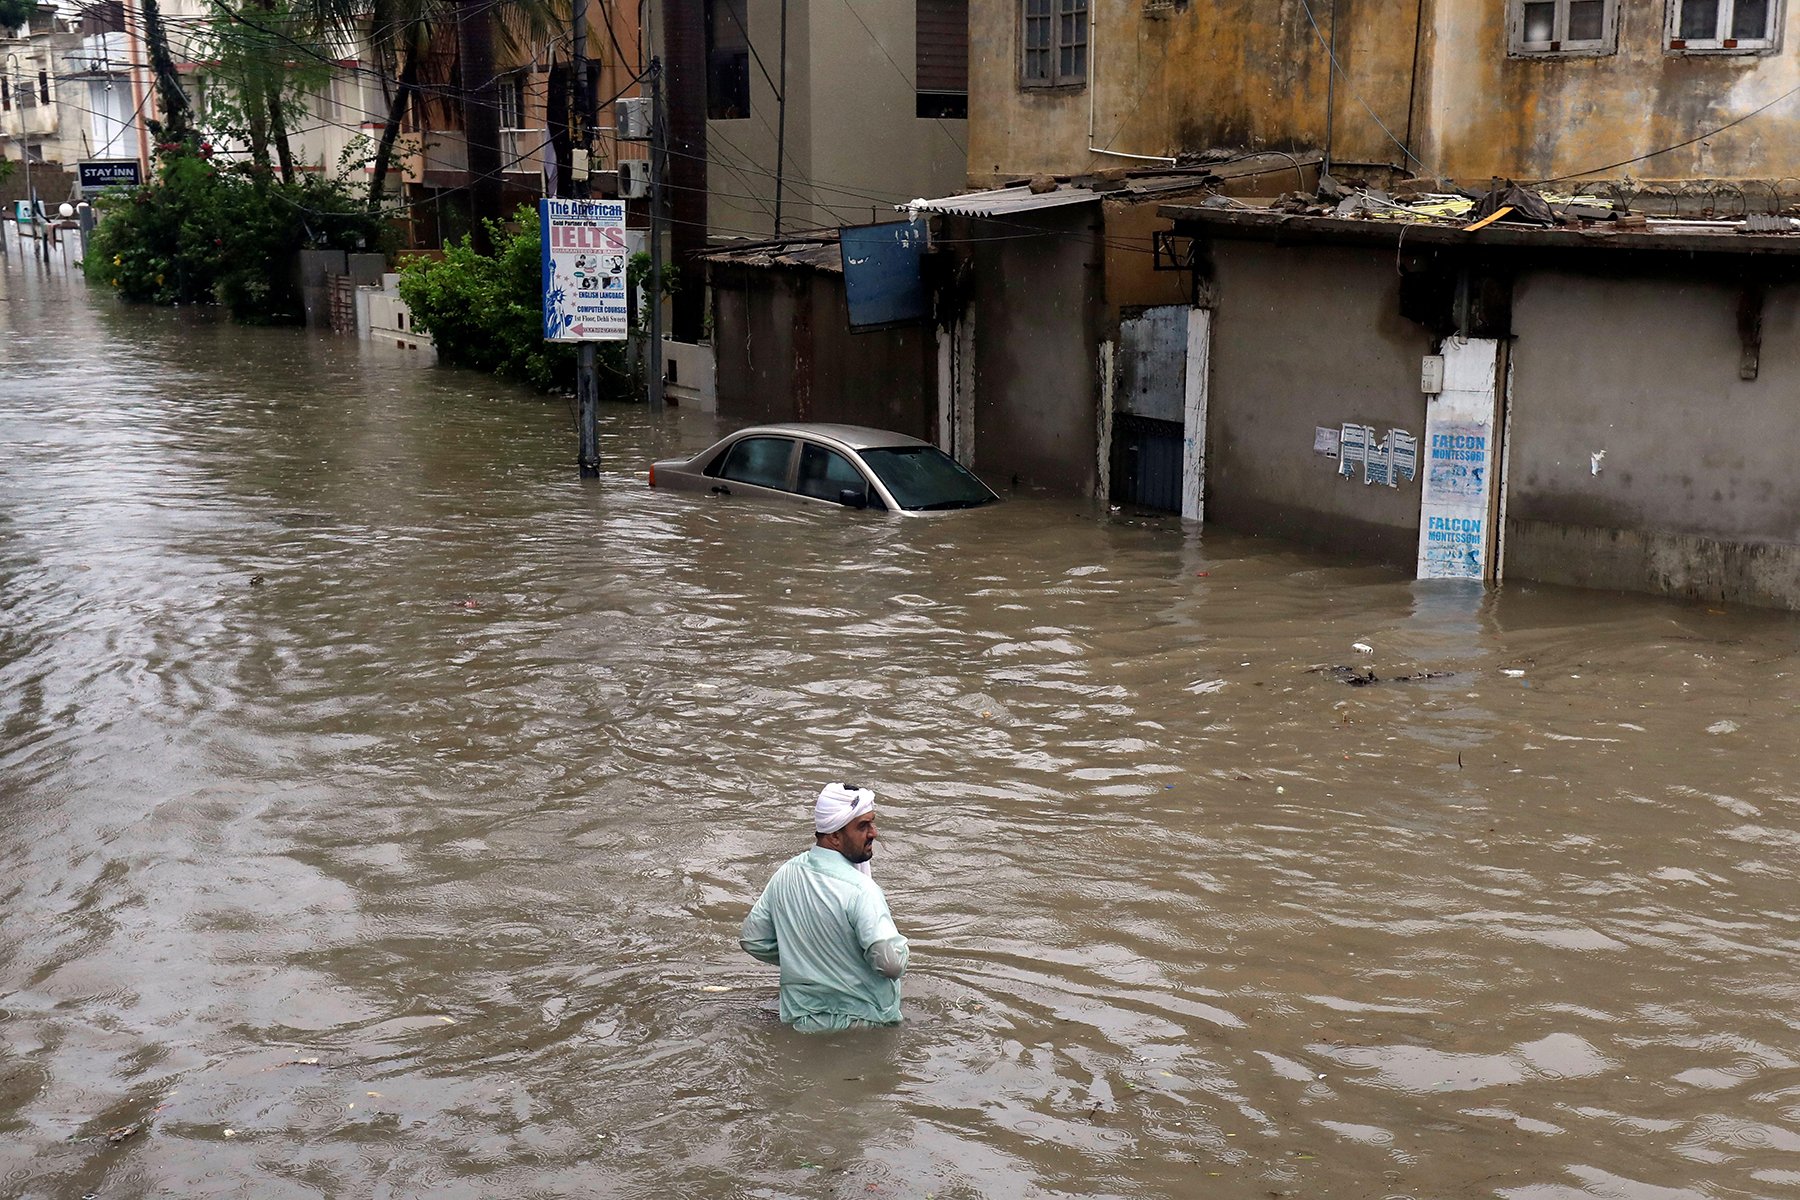 A man wades through the Karachi flood street with submerged vehicle during monsoon rain, as the outbreak of the coronavirus disease (COVID-19) continues, in Karachi, Pakistan August 27, 2020. REUTERS/Akhtar Soomro